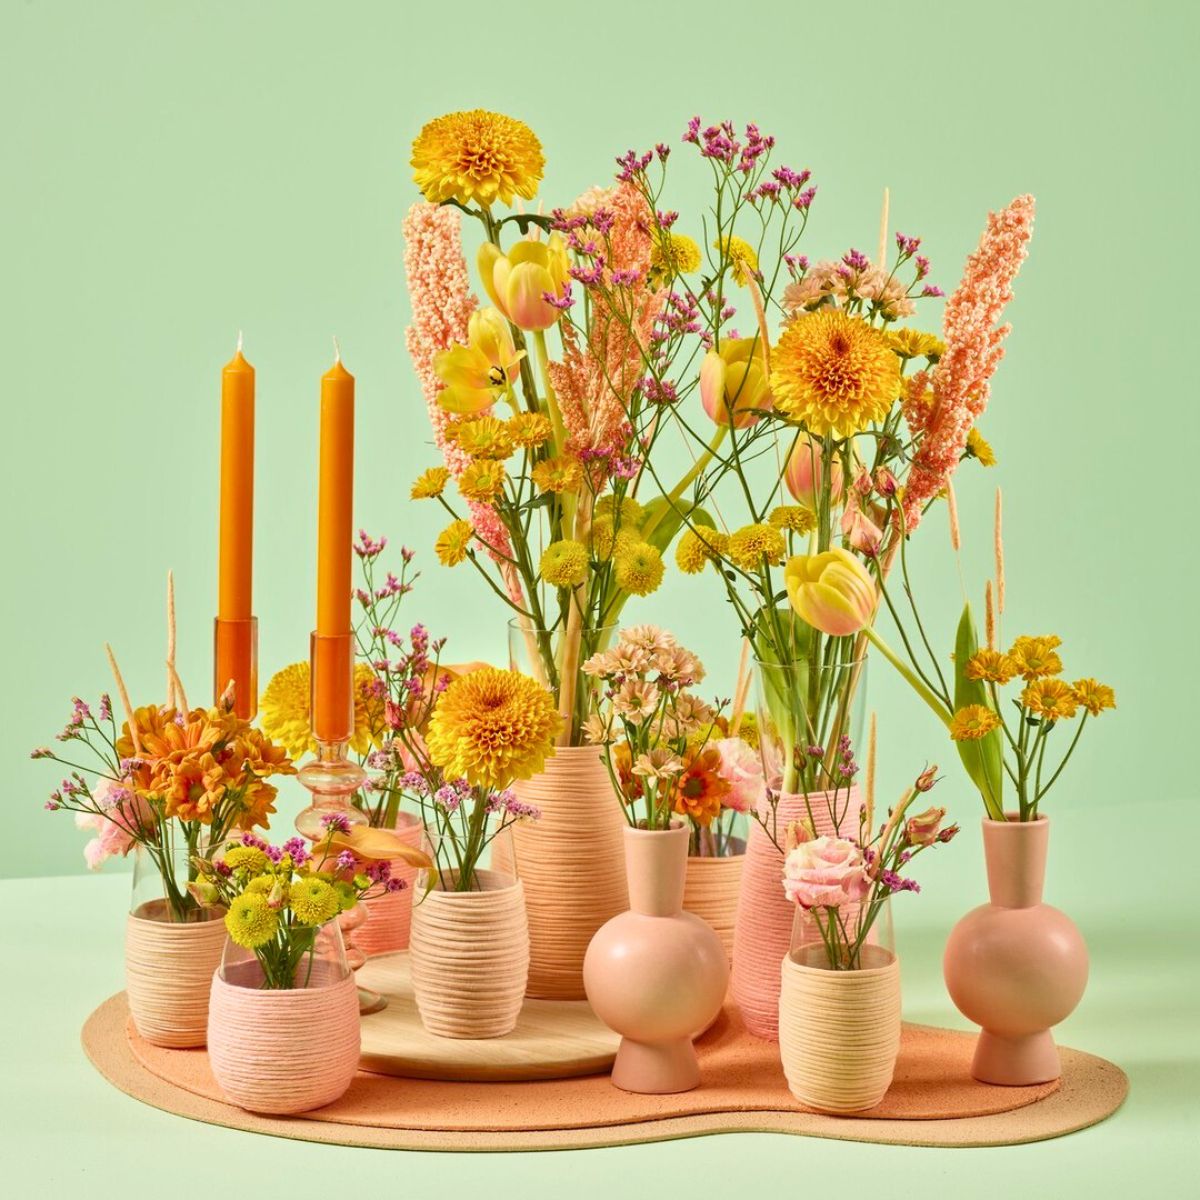 Arrangements with chrysanthemums